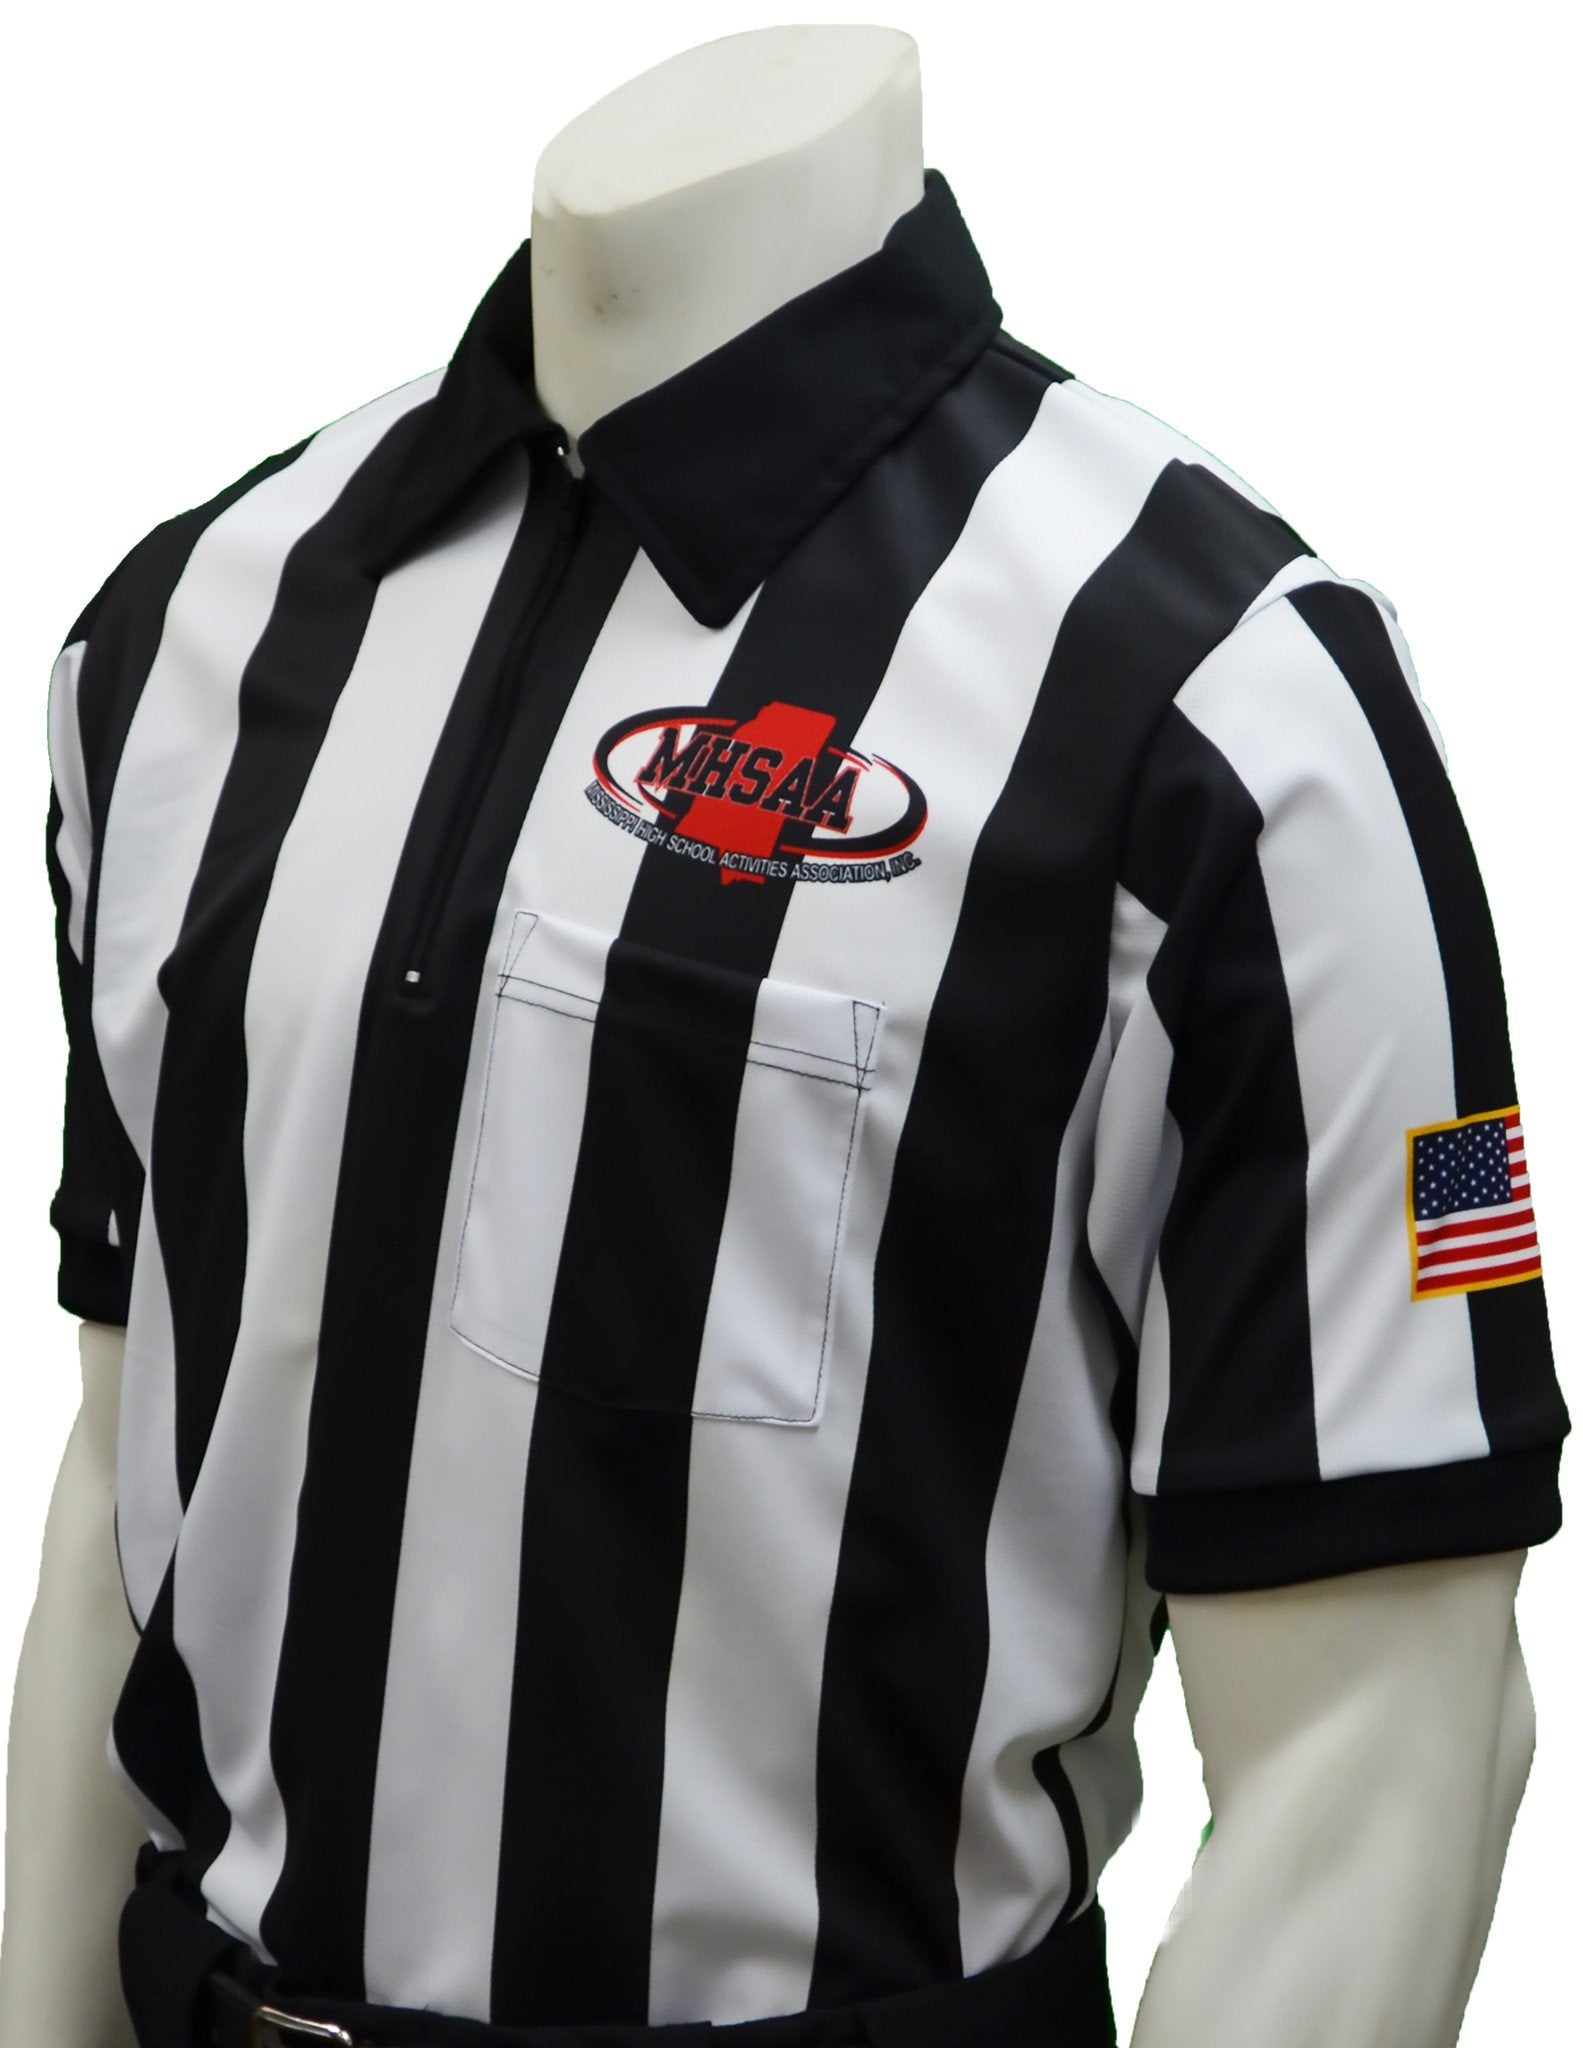 USA180MS-607 - Smitty "Made in USA" - "BODY FLEX" Mississippi Football Short Sleeve Shirt